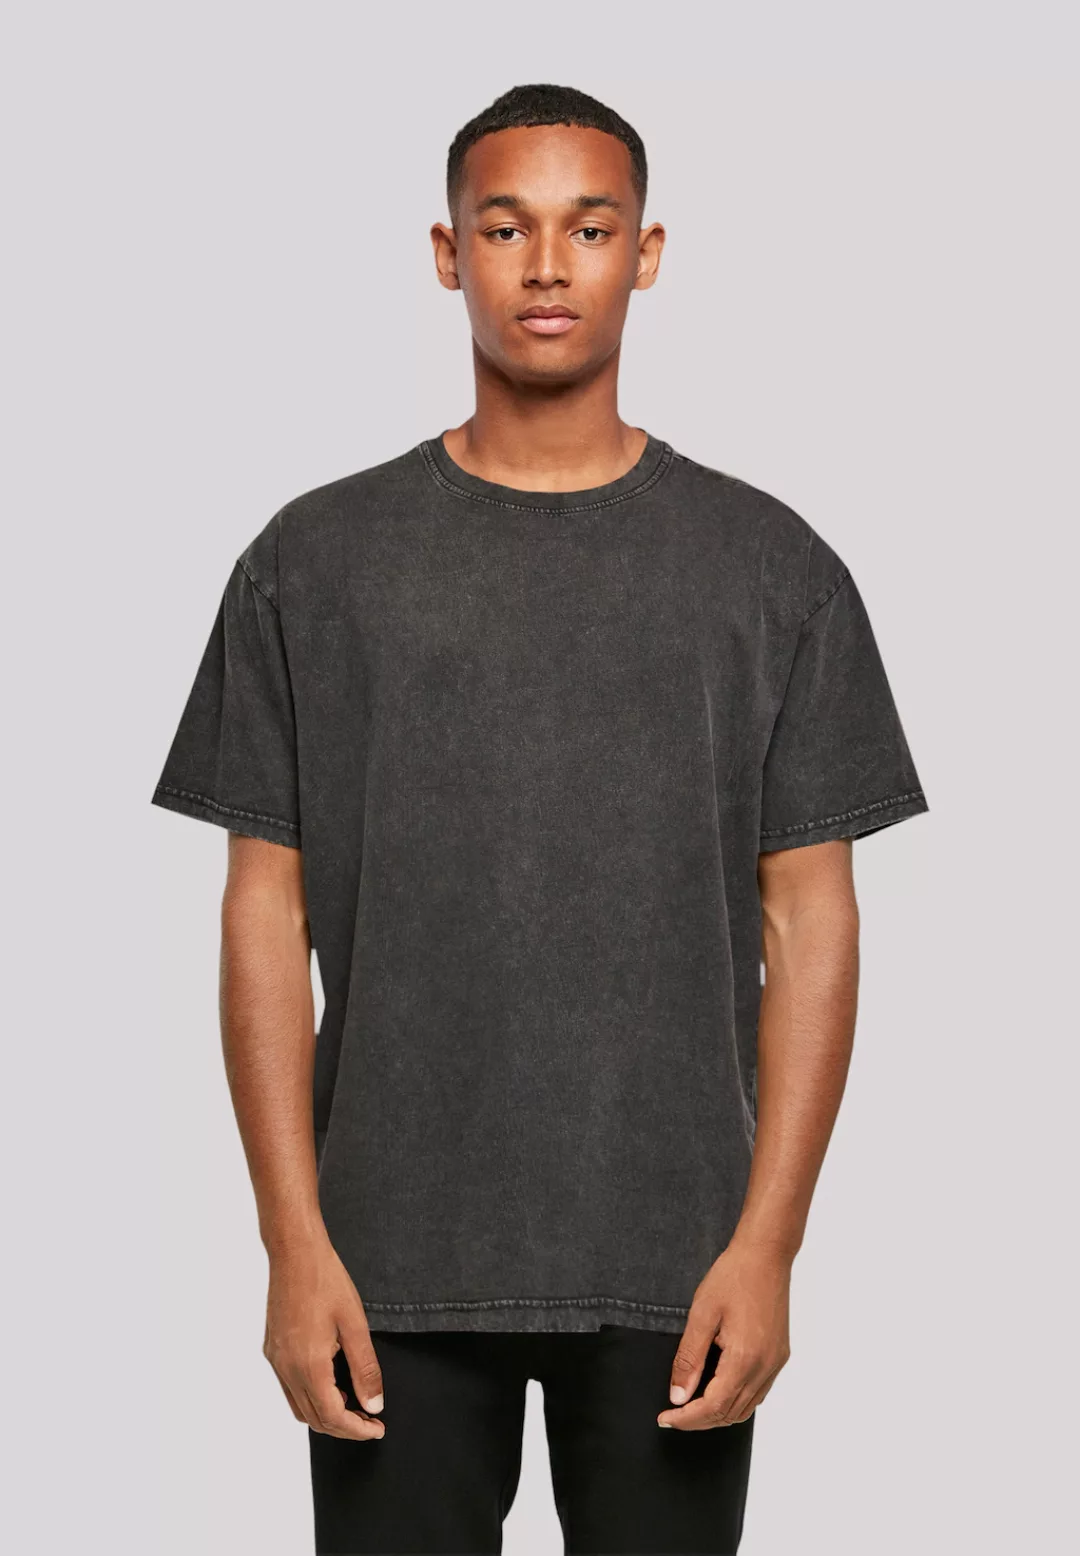 F4NT4STIC T-Shirt "Sunny side up" günstig online kaufen